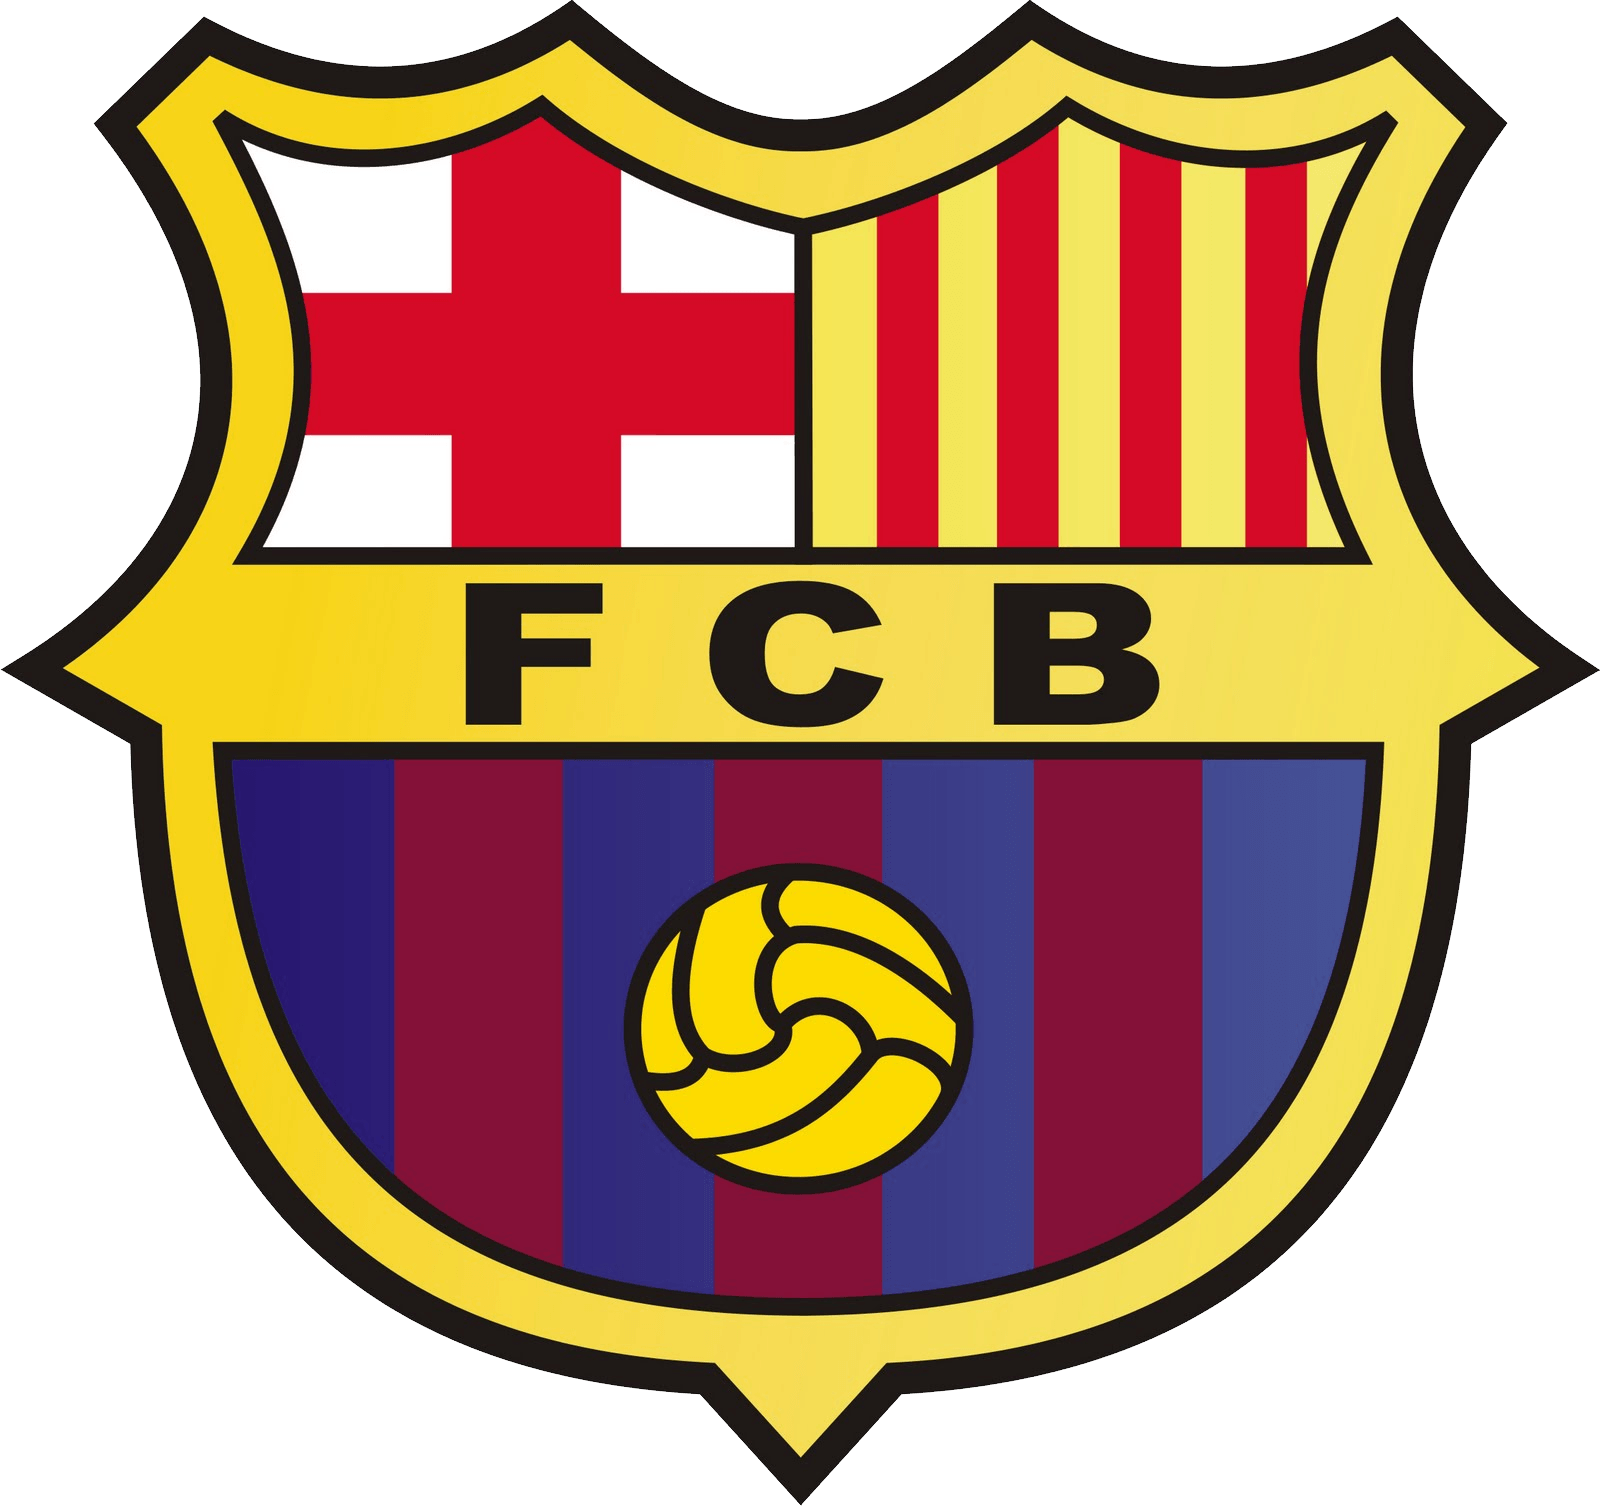 FCB Logo - FC Barcelona PNG logo, FCB PNG logo free download